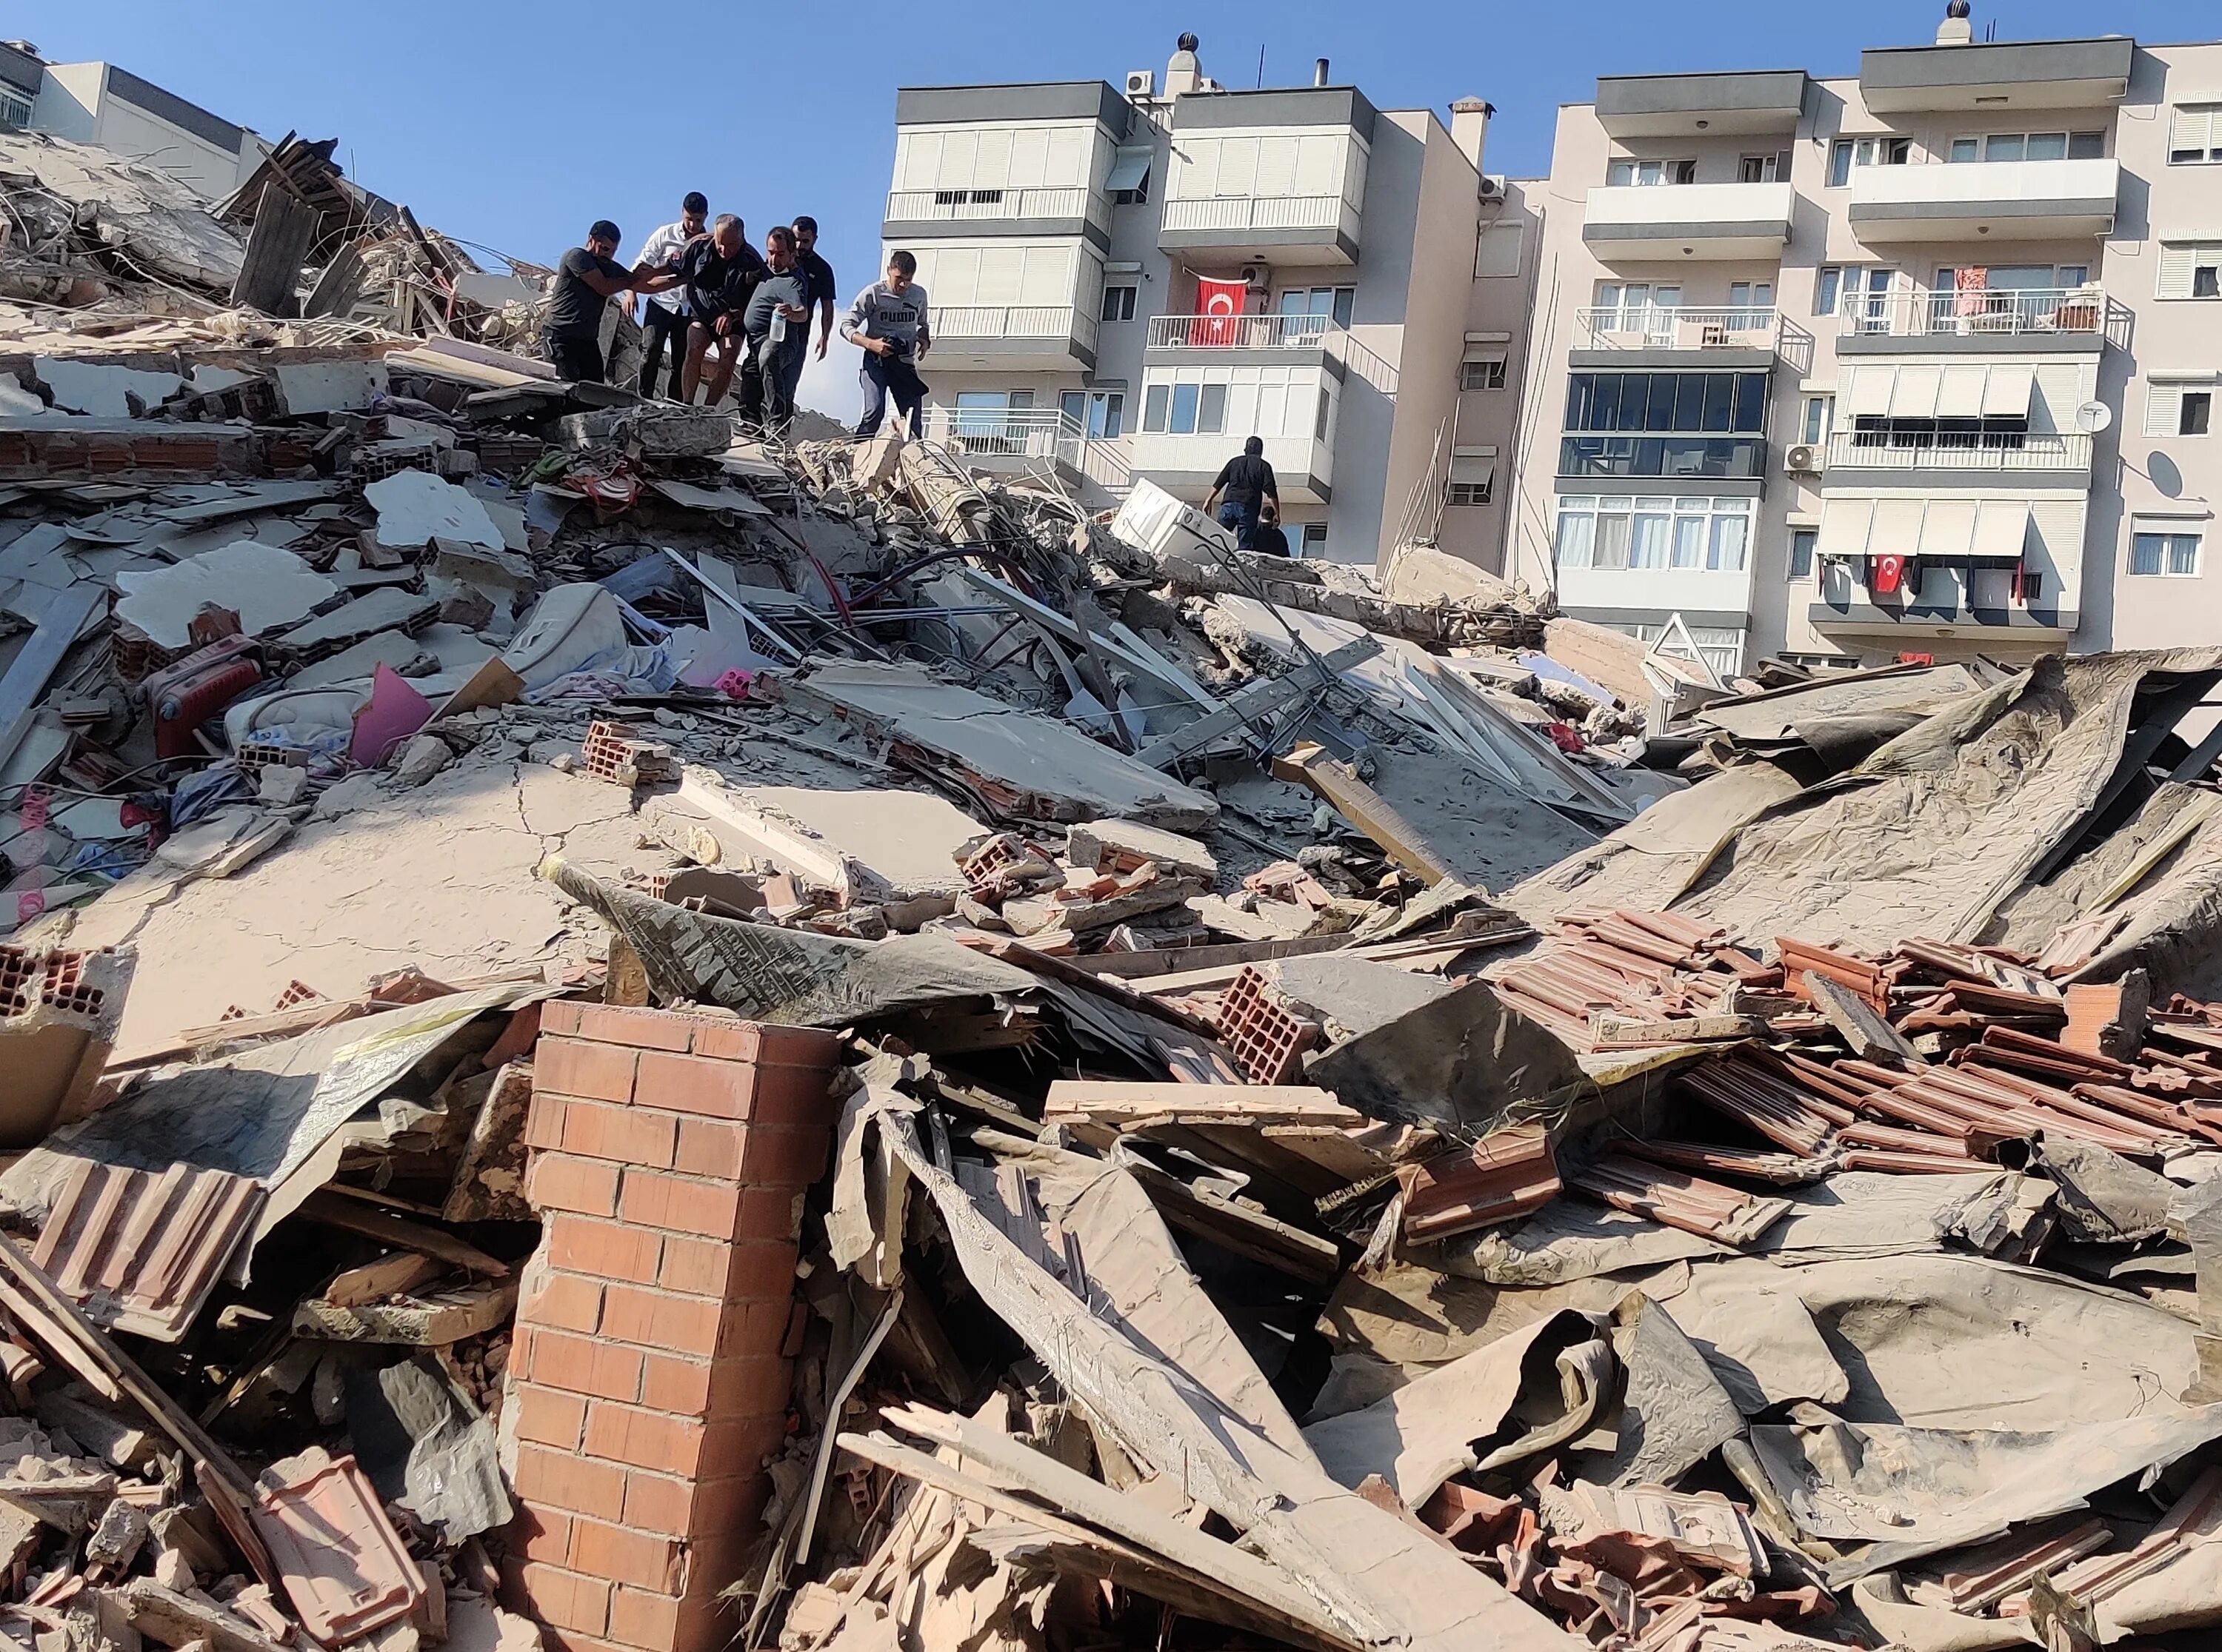 Дома после землетрясения. Землетрясение в Турции 2023 разрушения. Измитское землетрясение 1999 года. Измир Турция землетрясение 1999. Землетрясение в Стамбуле 1999.